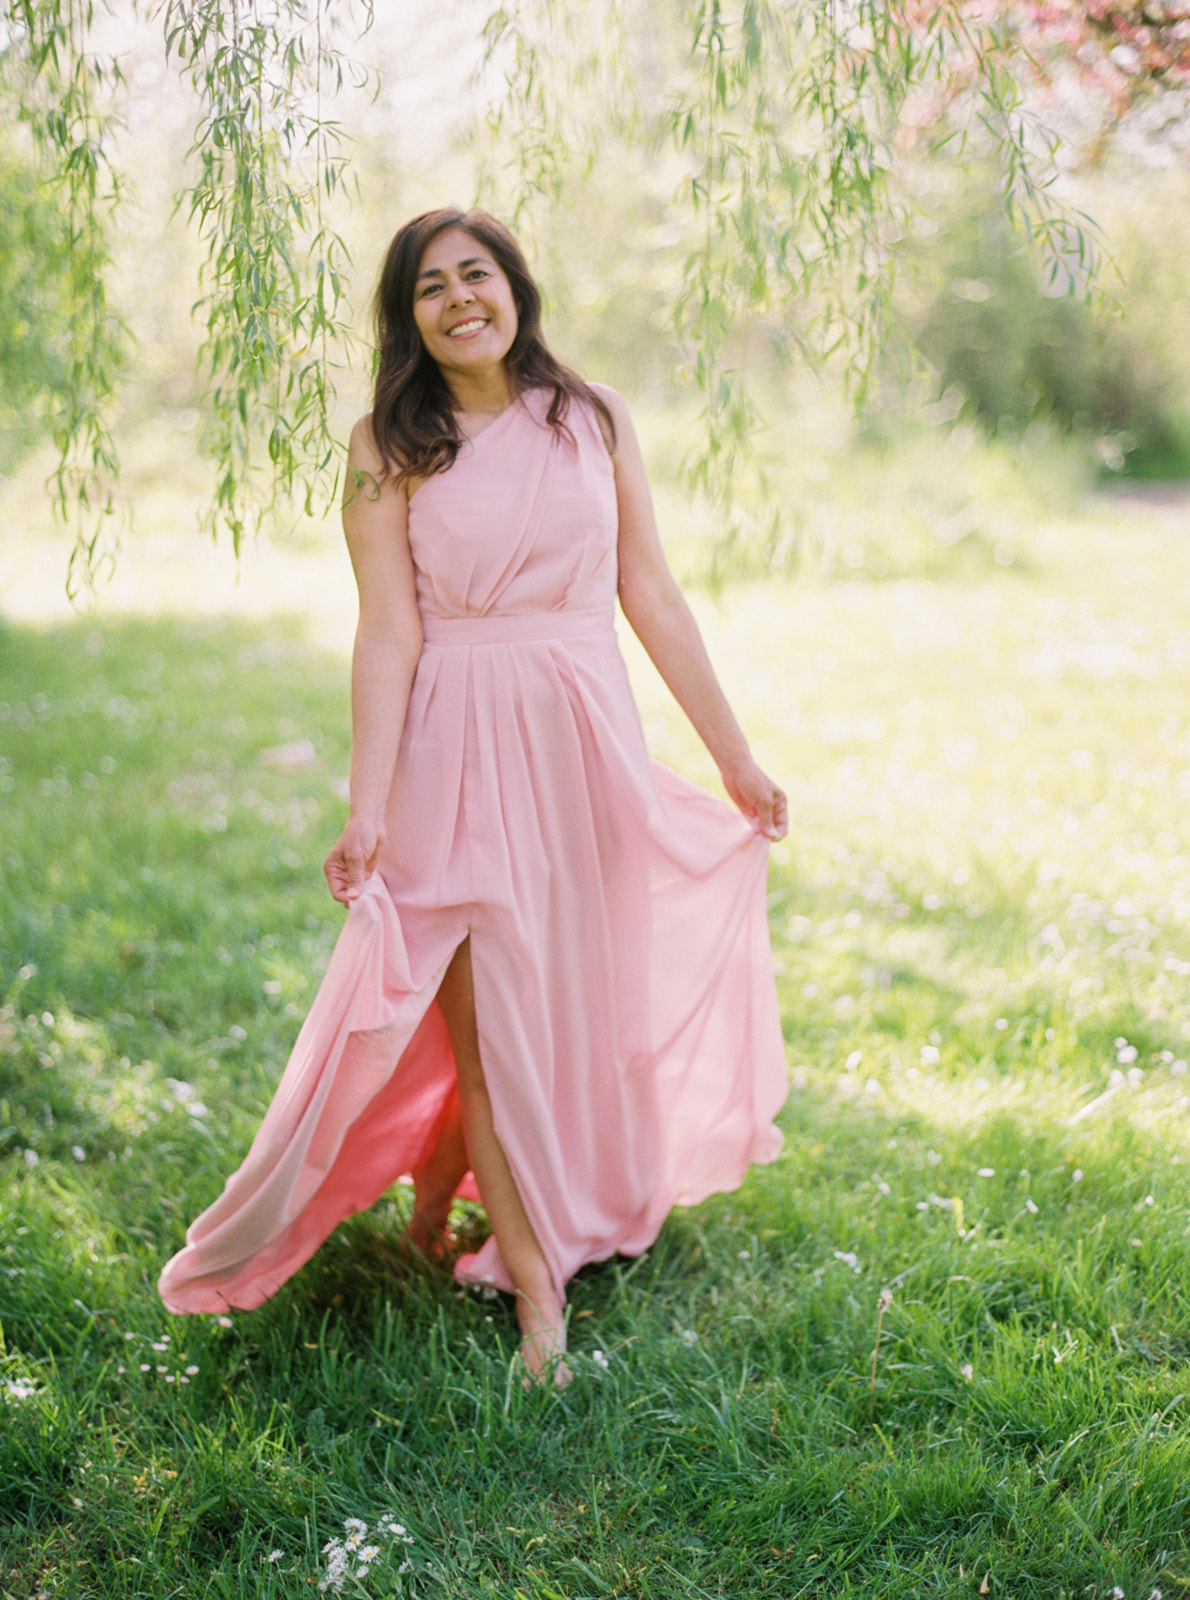 a woman in a pink dress walks through a grassy meadow